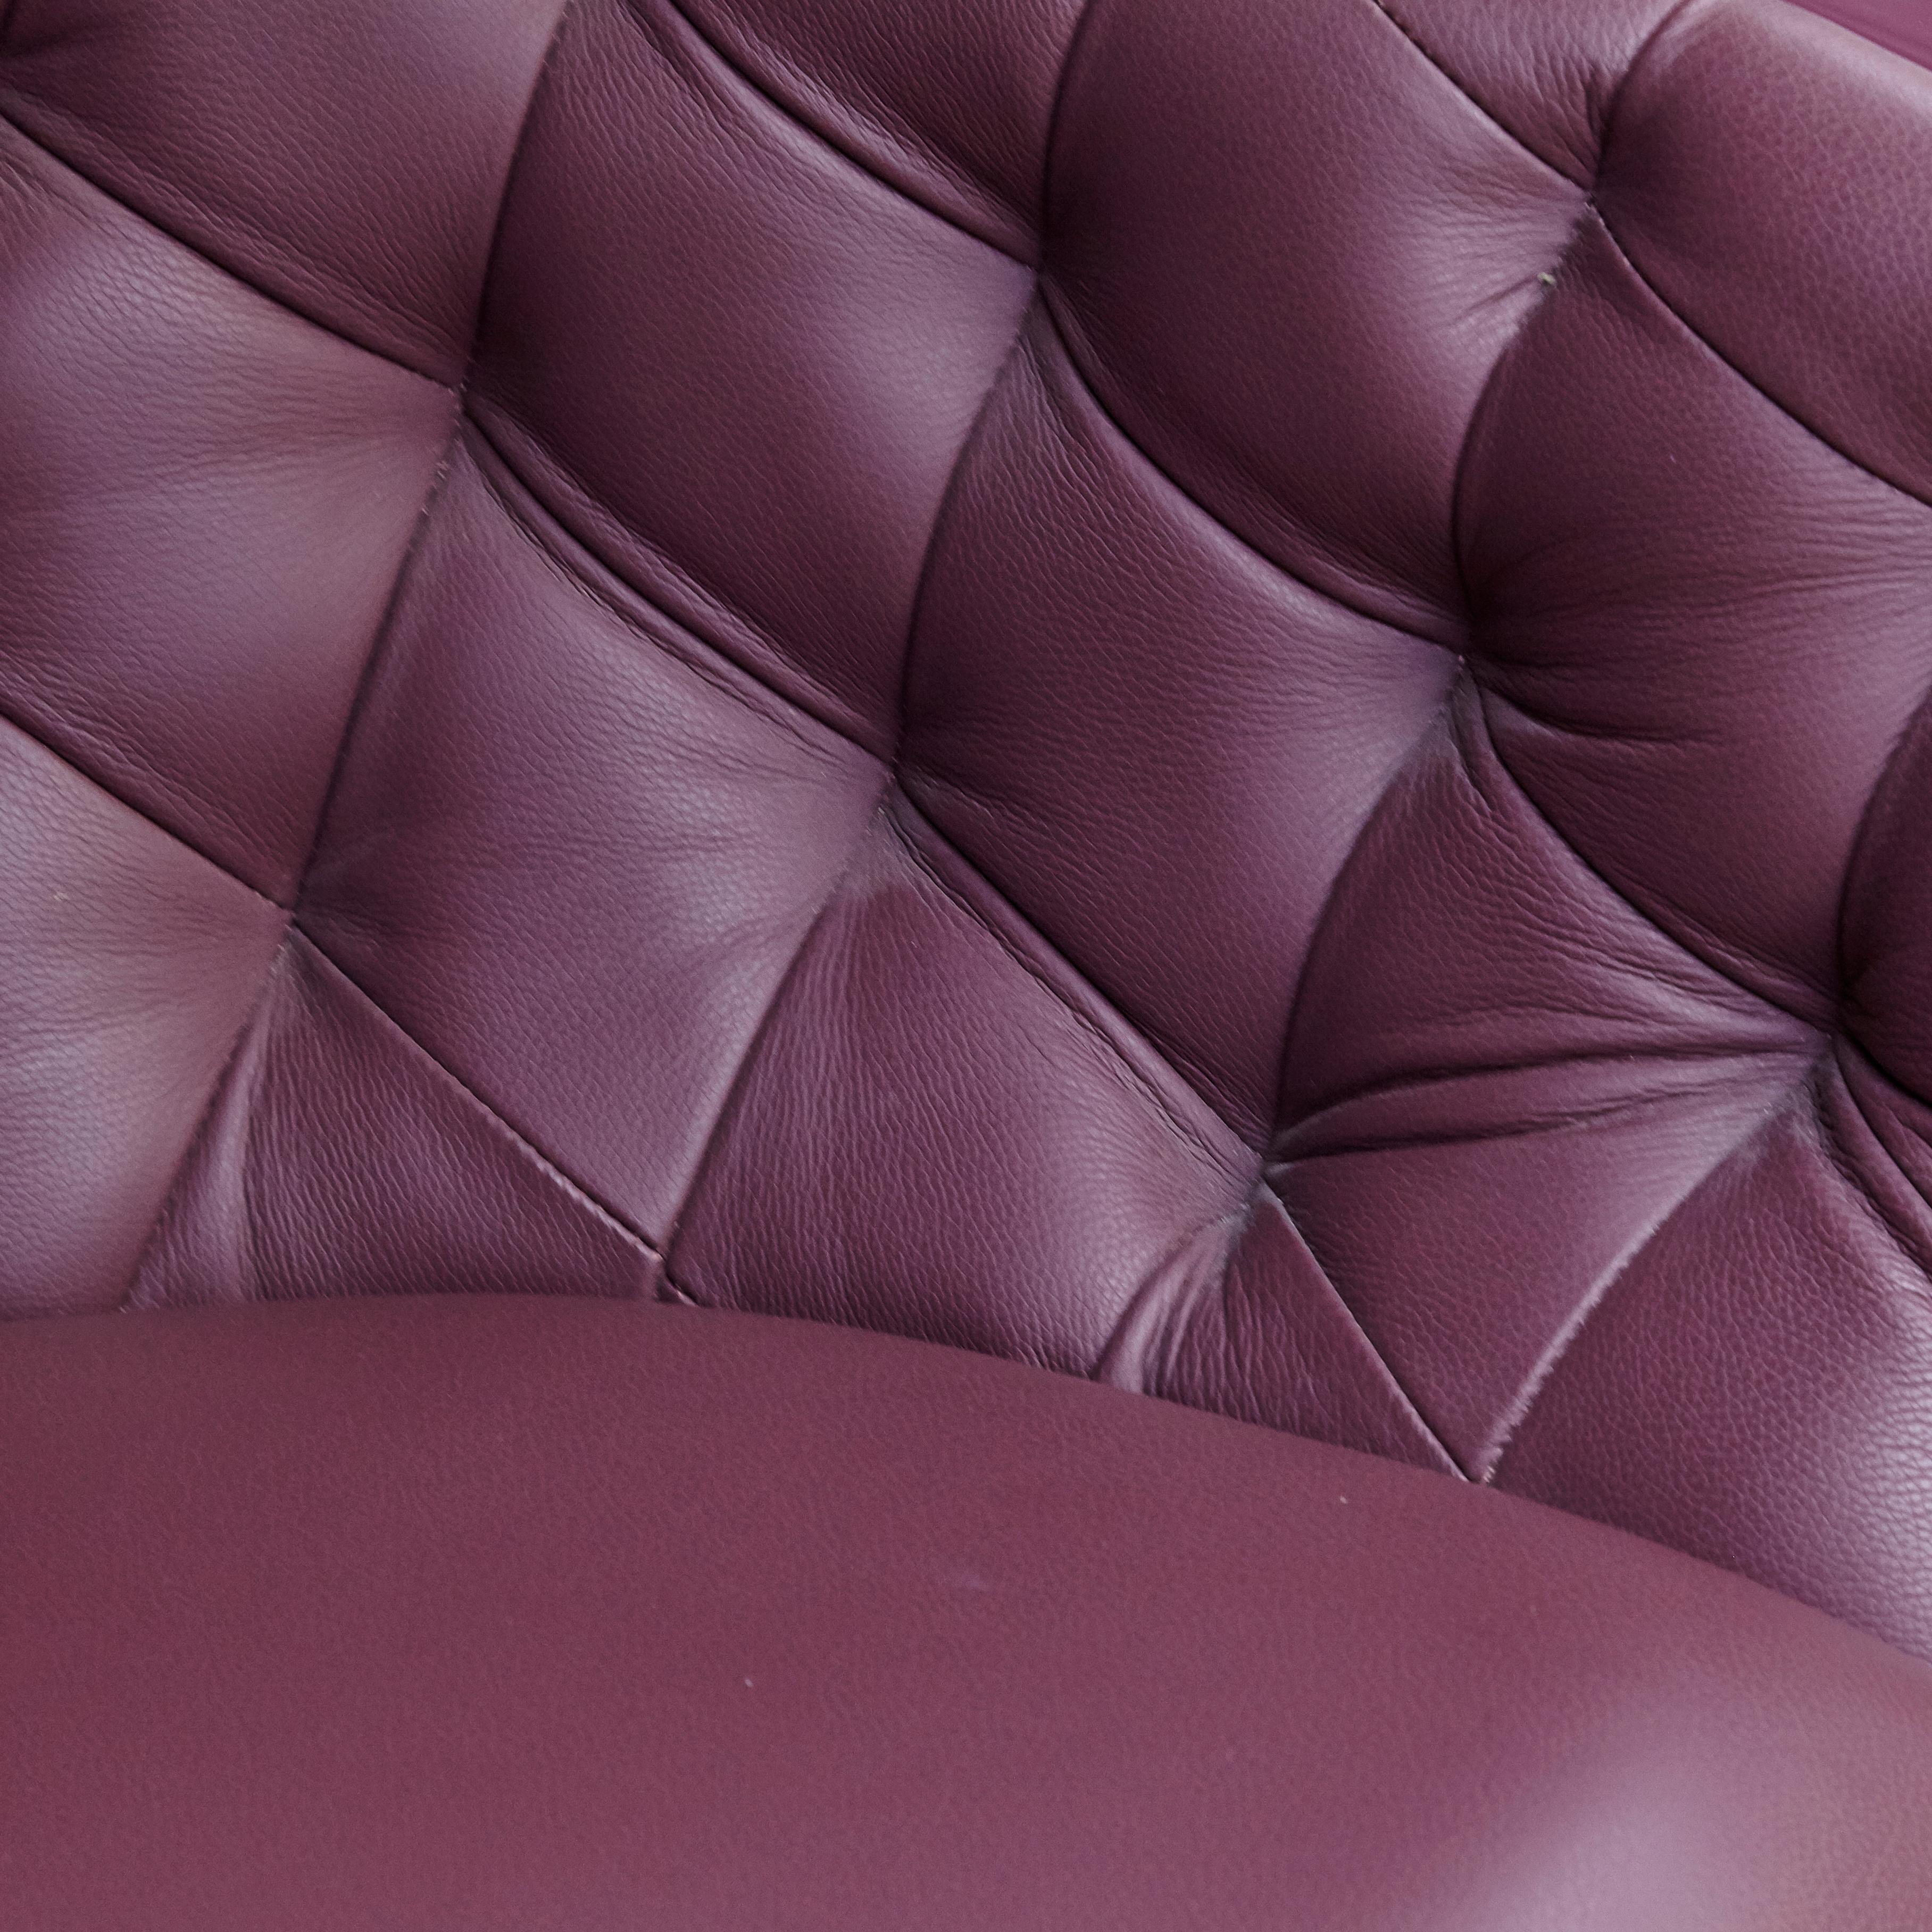 Jaime Hayon Contemporary Showtime Armchair Lacquered Purple Poltrona 5